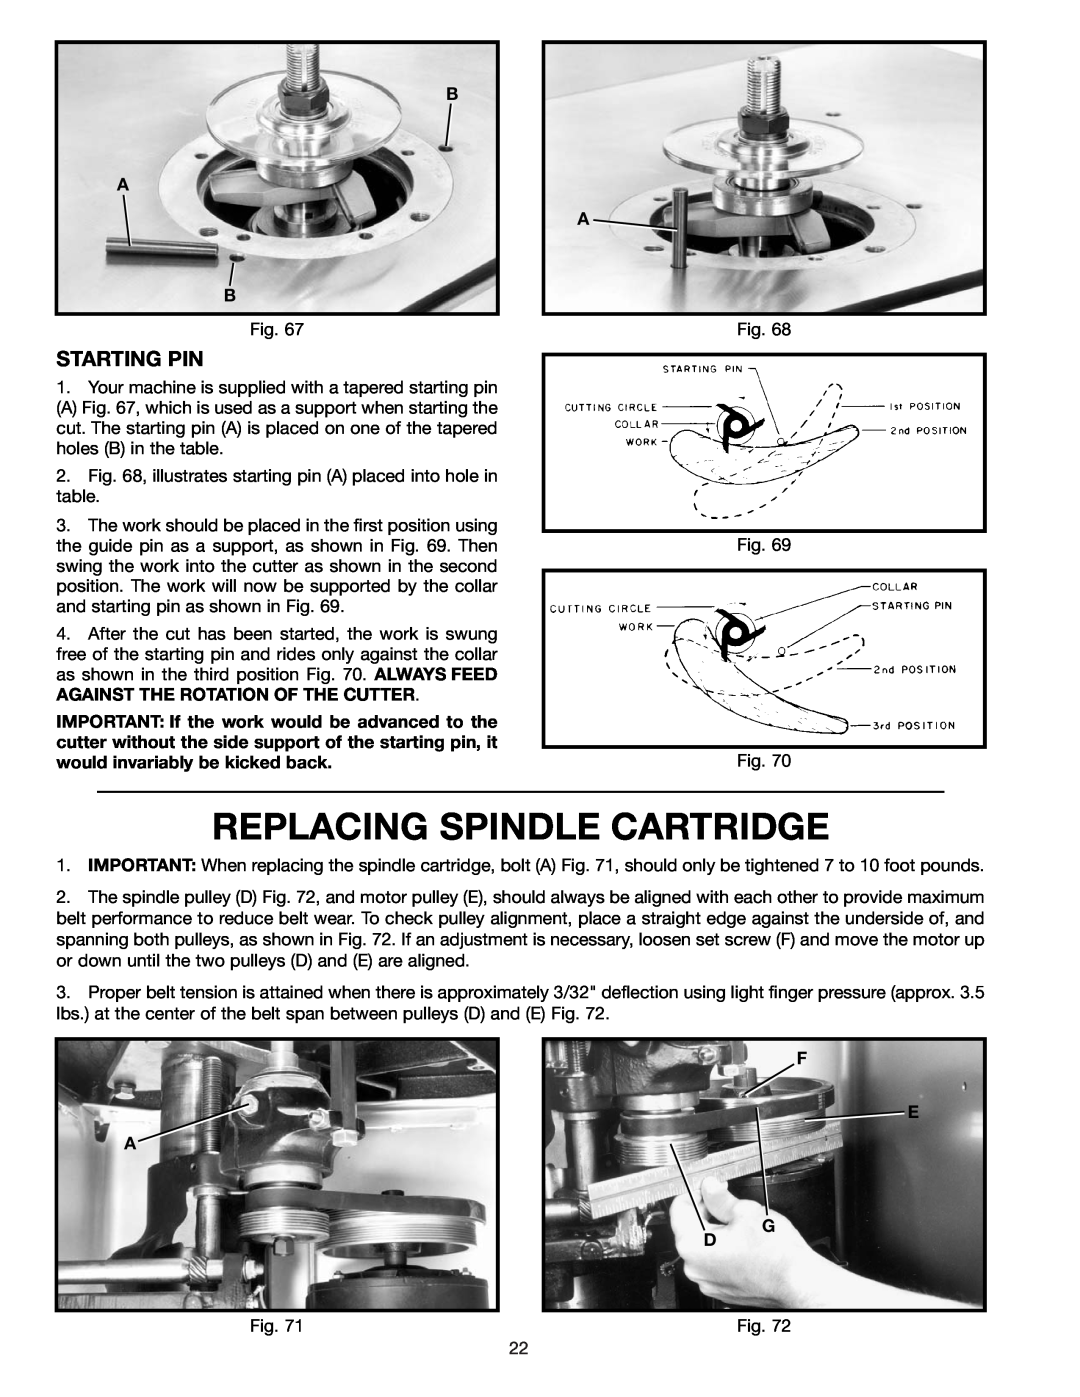 Delta 43-424 instruction manual Replacing Spindle Cartridge, Starting Pin, B A B 